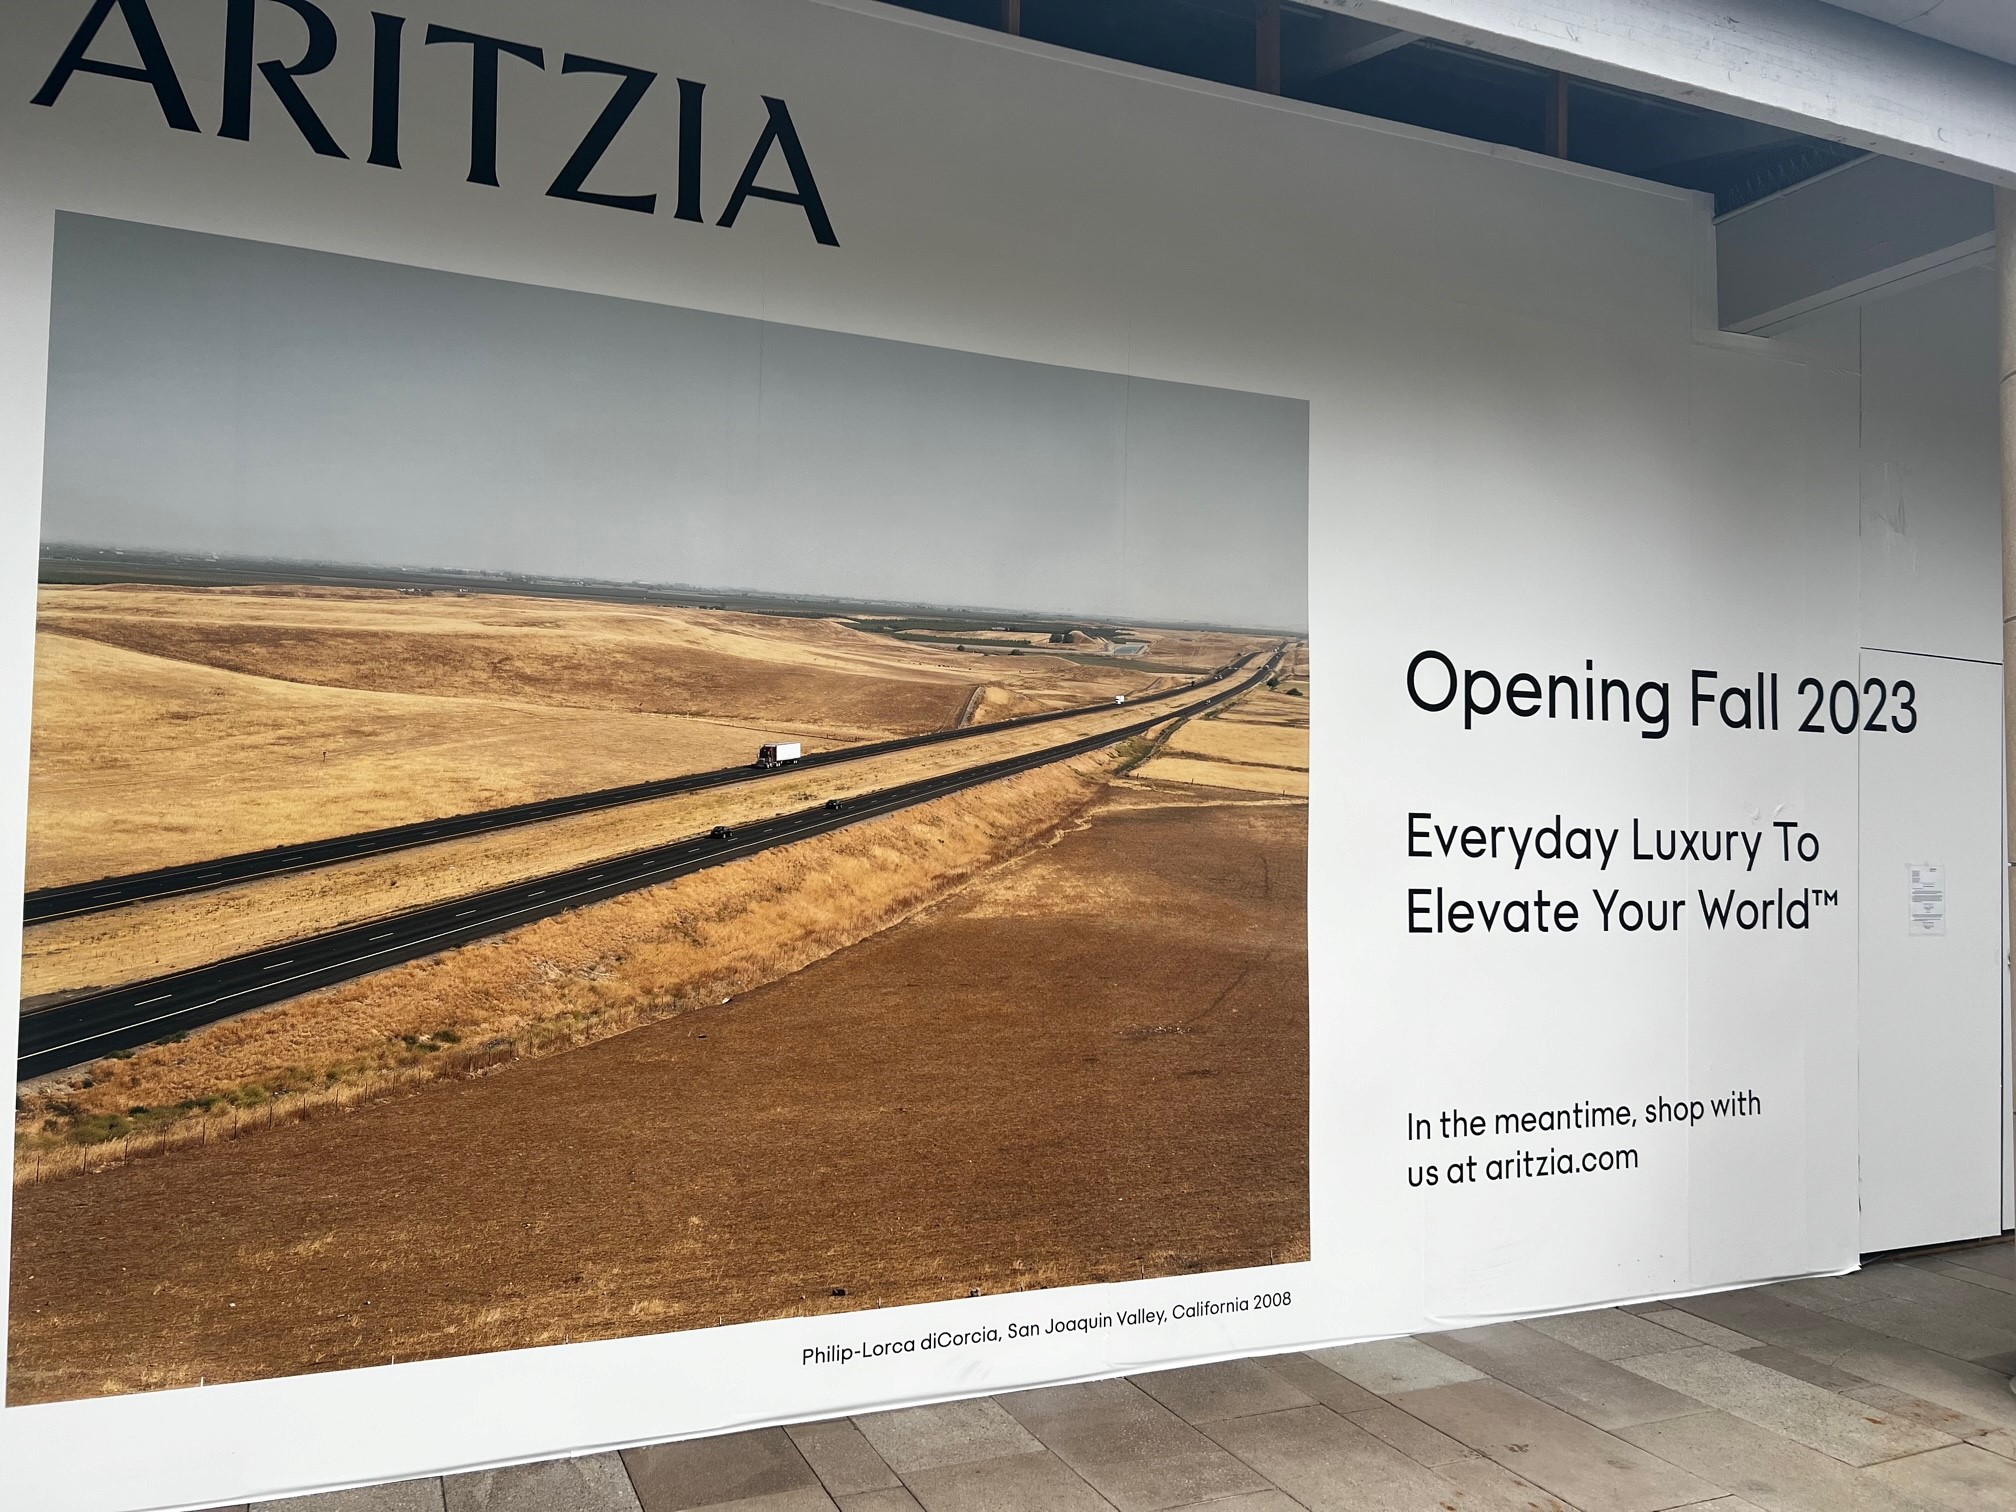 Aritzia barricade announcing their opening this fall